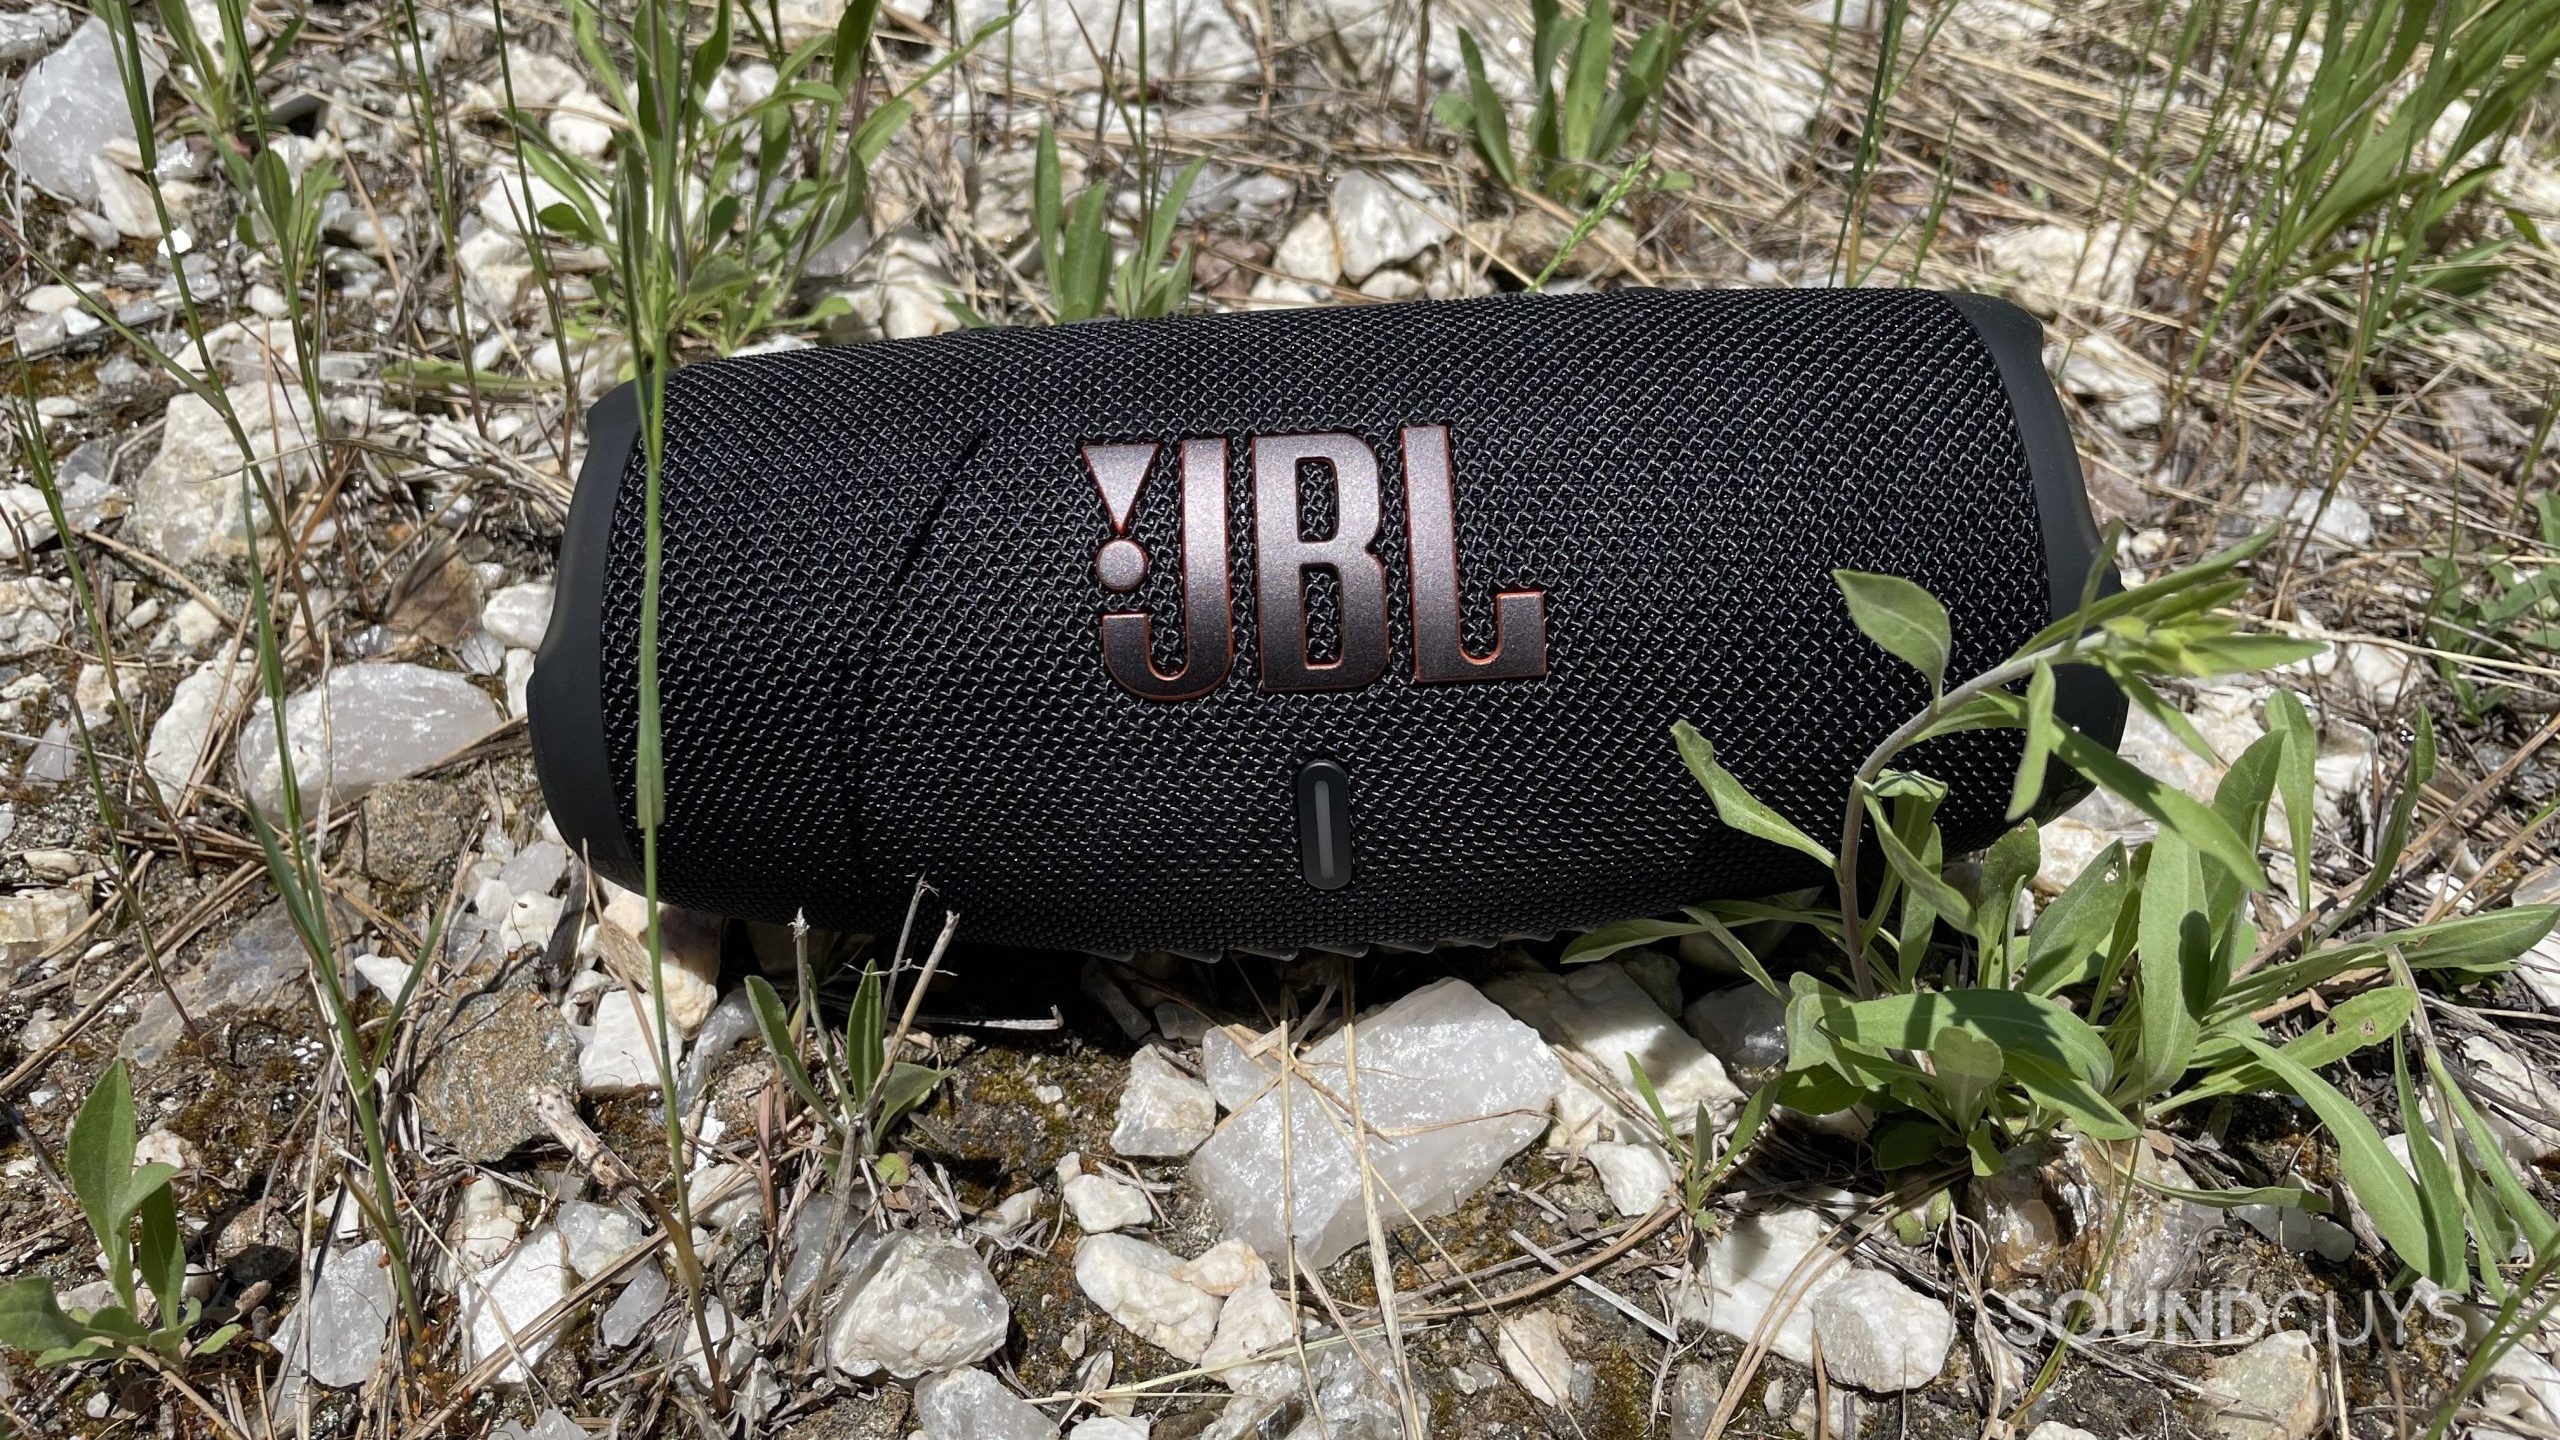 JBL Flip 3 review: Is it still worth the money? - SoundGuys